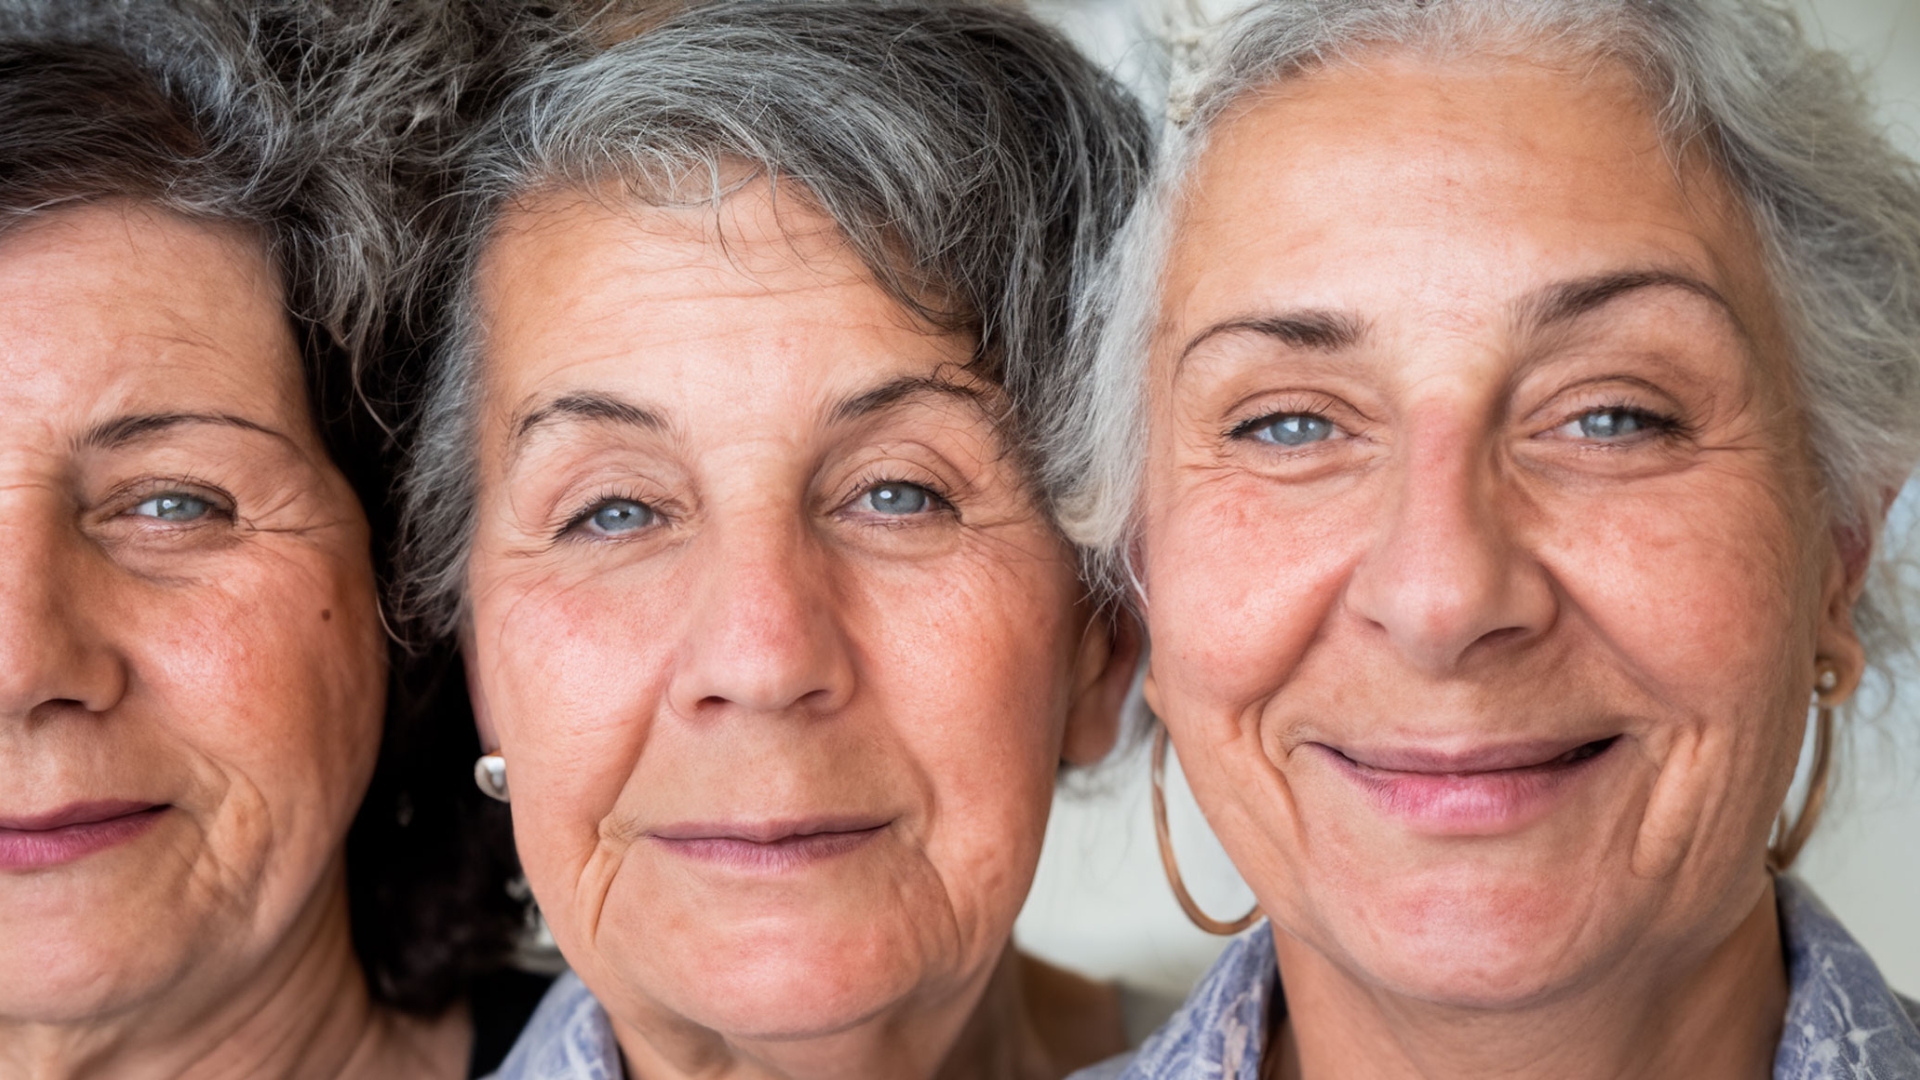 faces of three older women